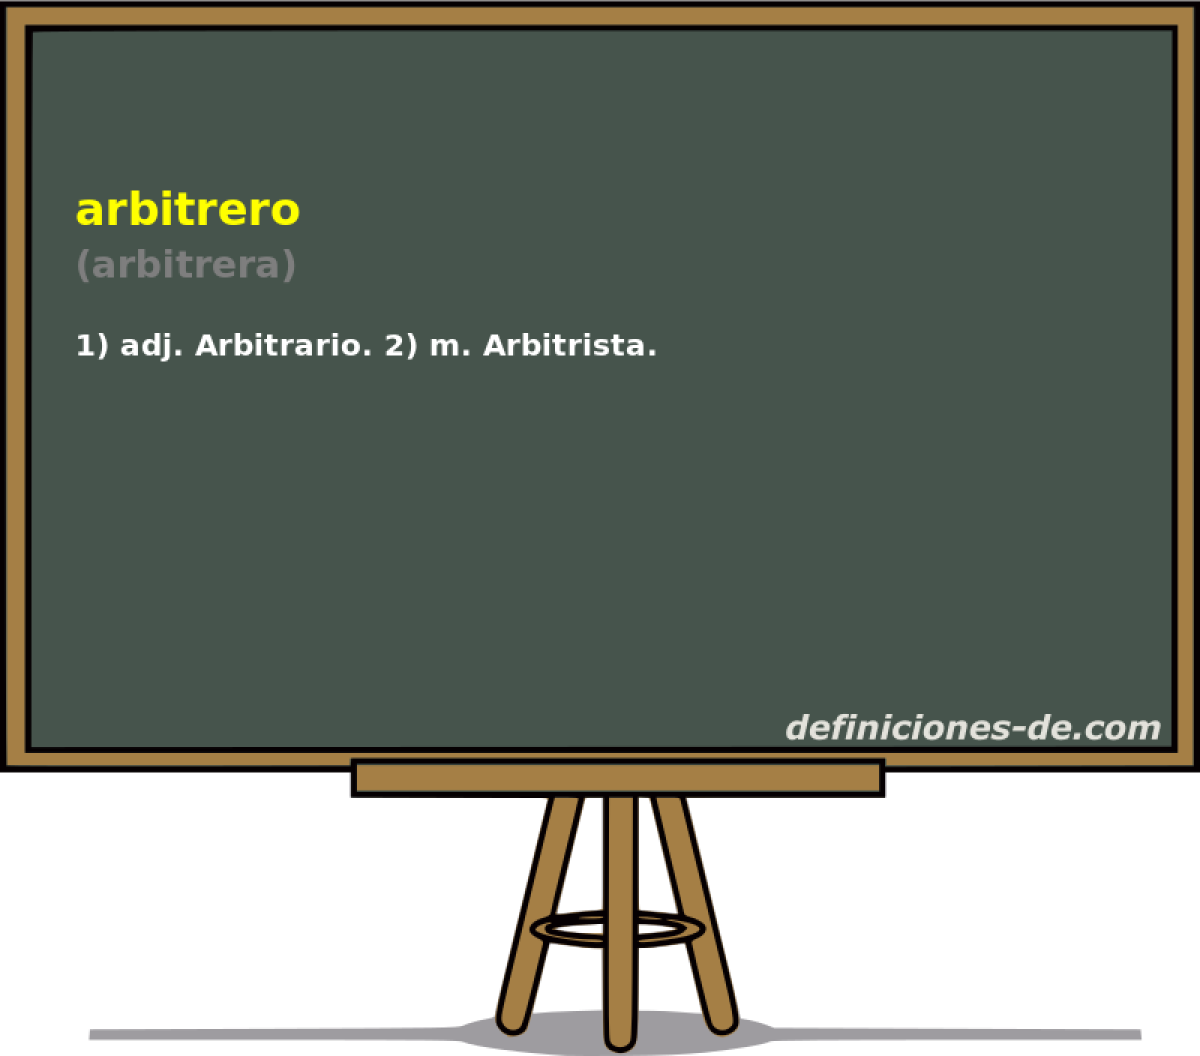 arbitrero (arbitrera)